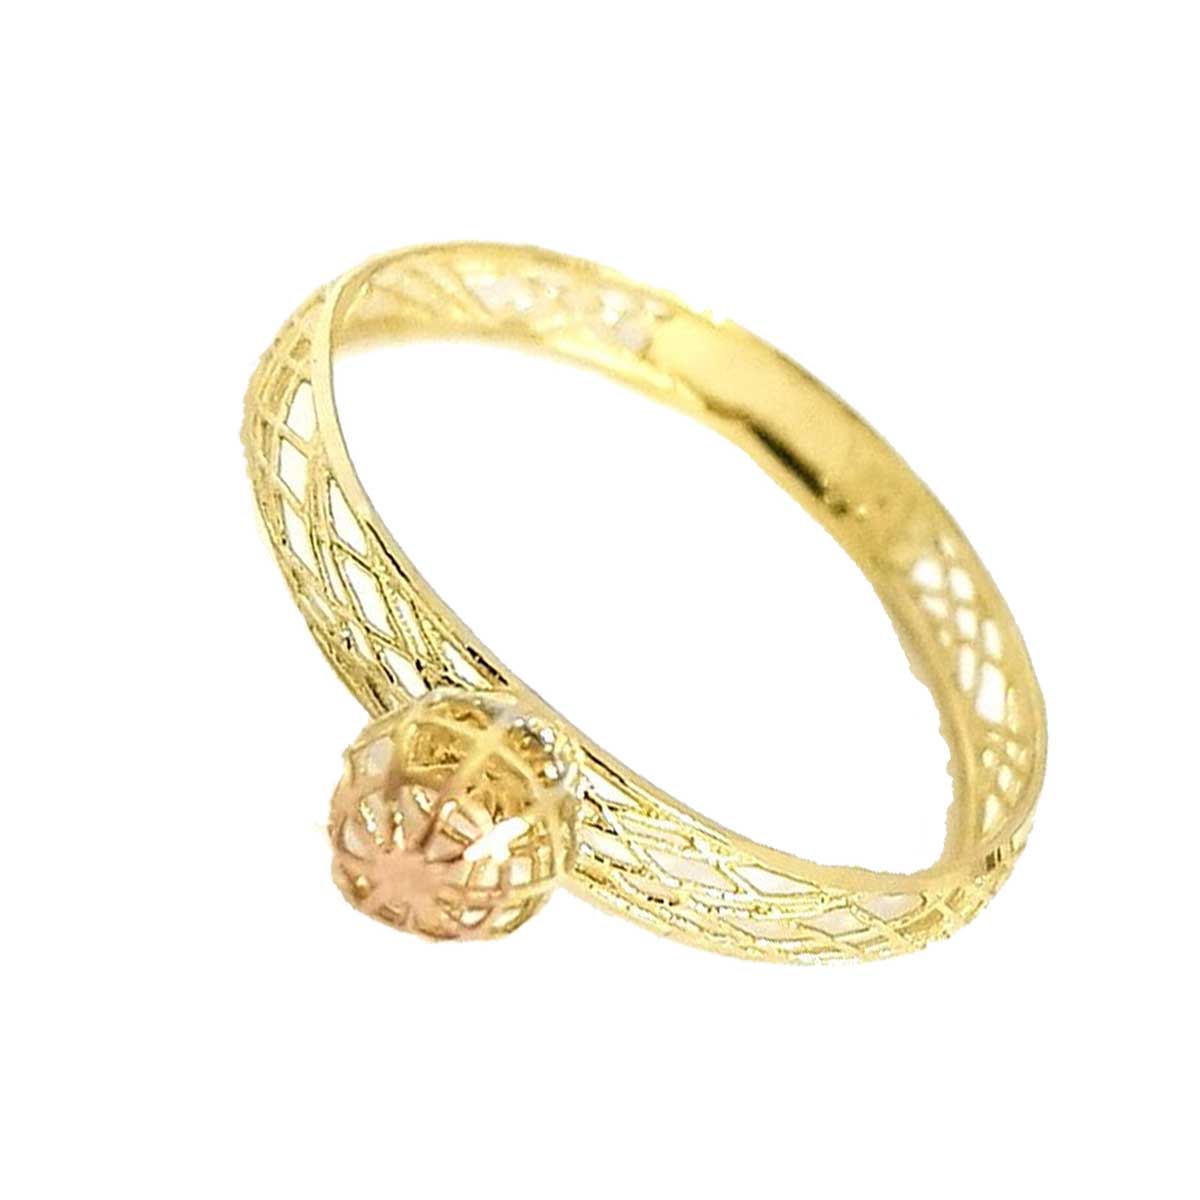 GR451_01 18 Karat Gold Ring